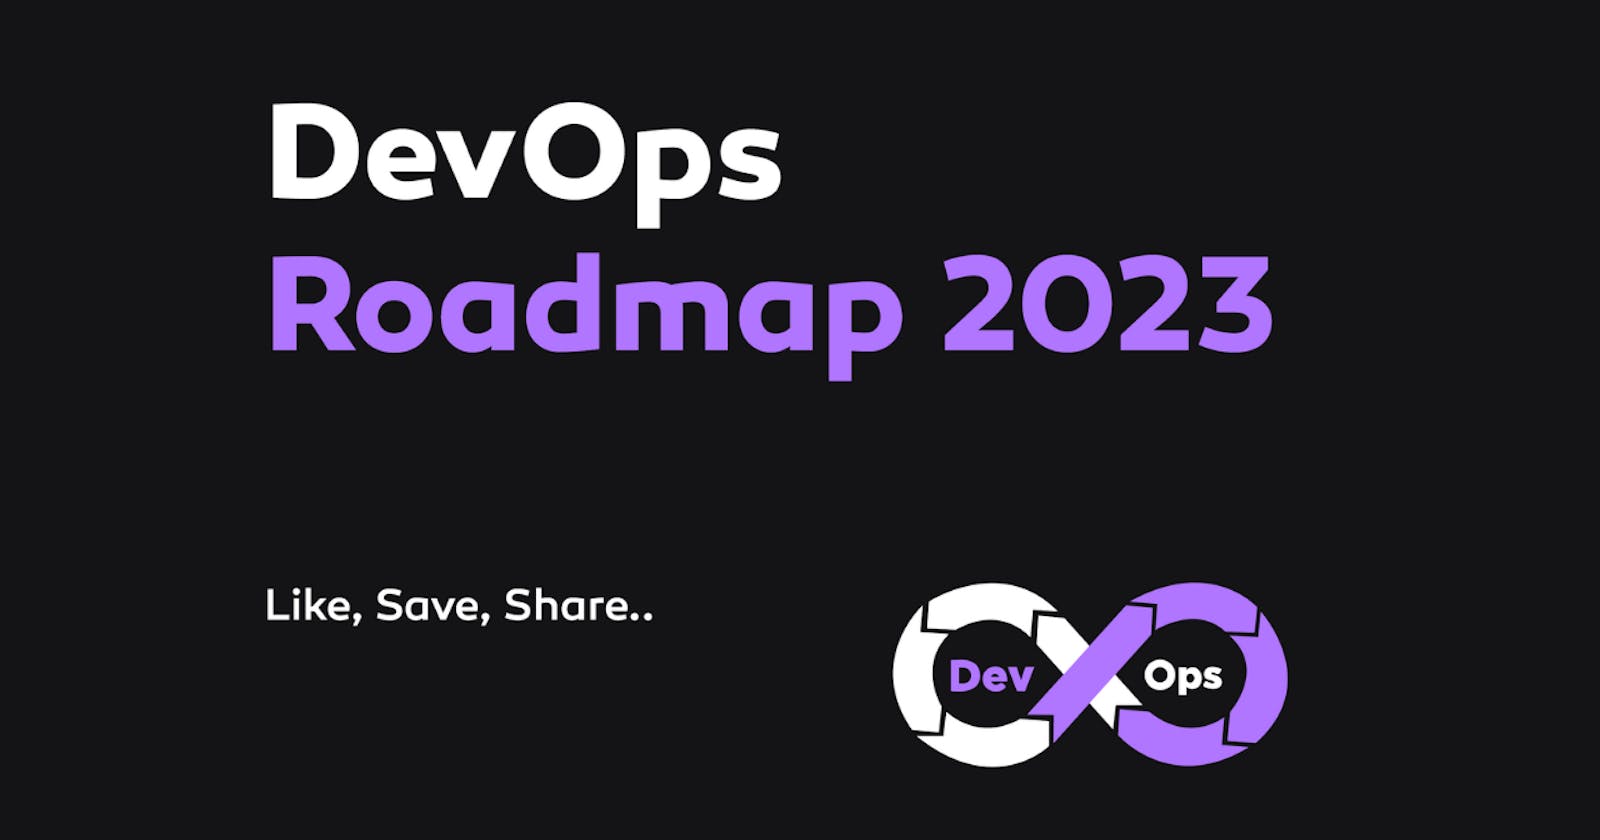 DevOps Roadmap 2023 - Ultimate guide to become a DevOps Engineer